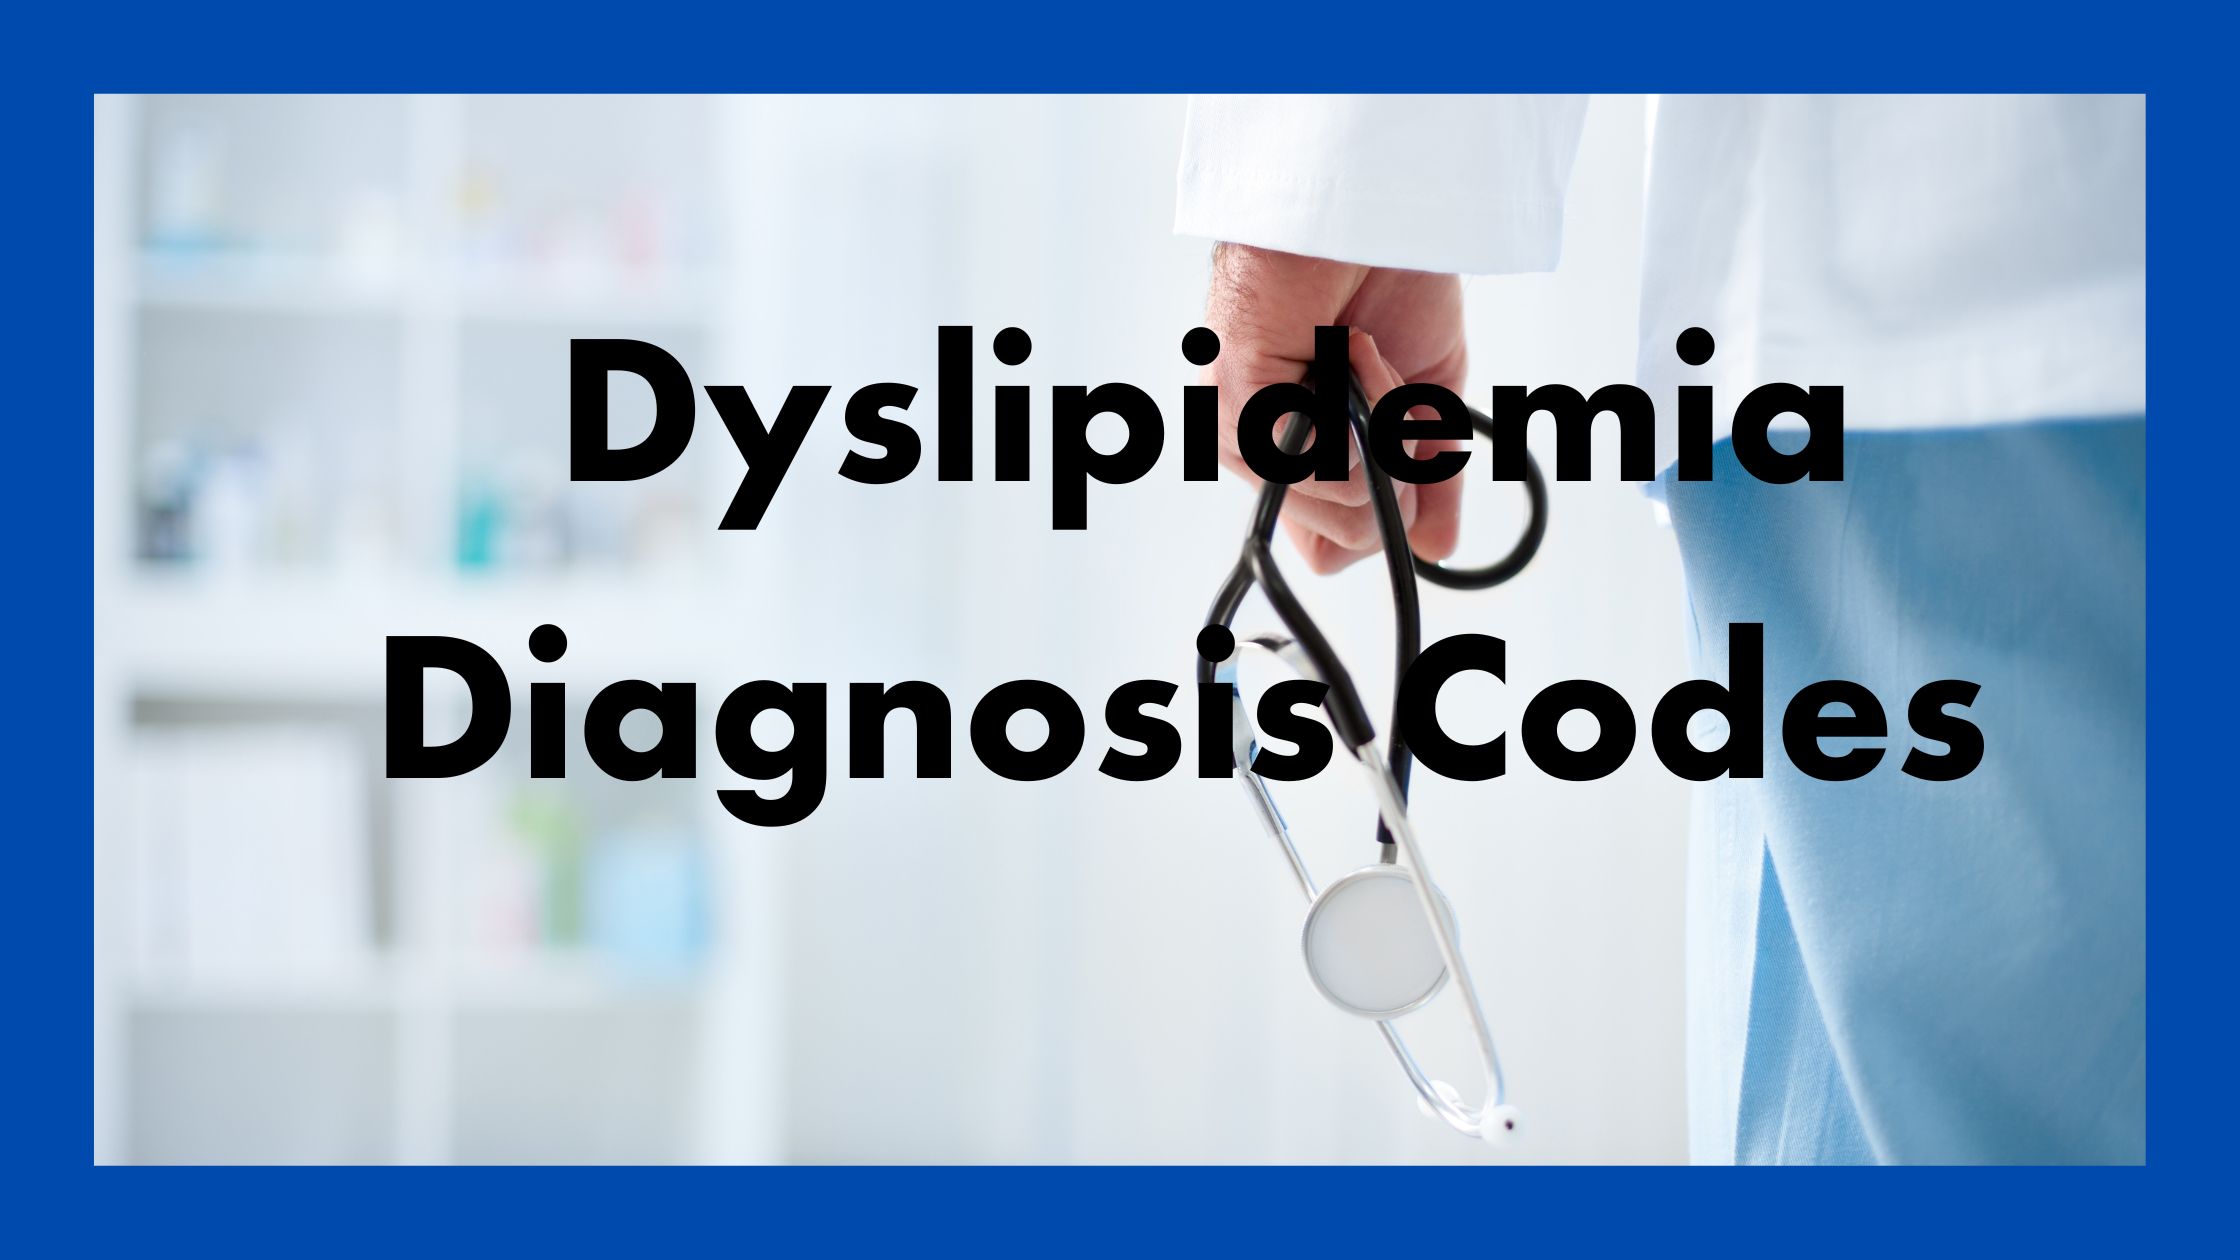 Dyslipidemia icd 10 codes